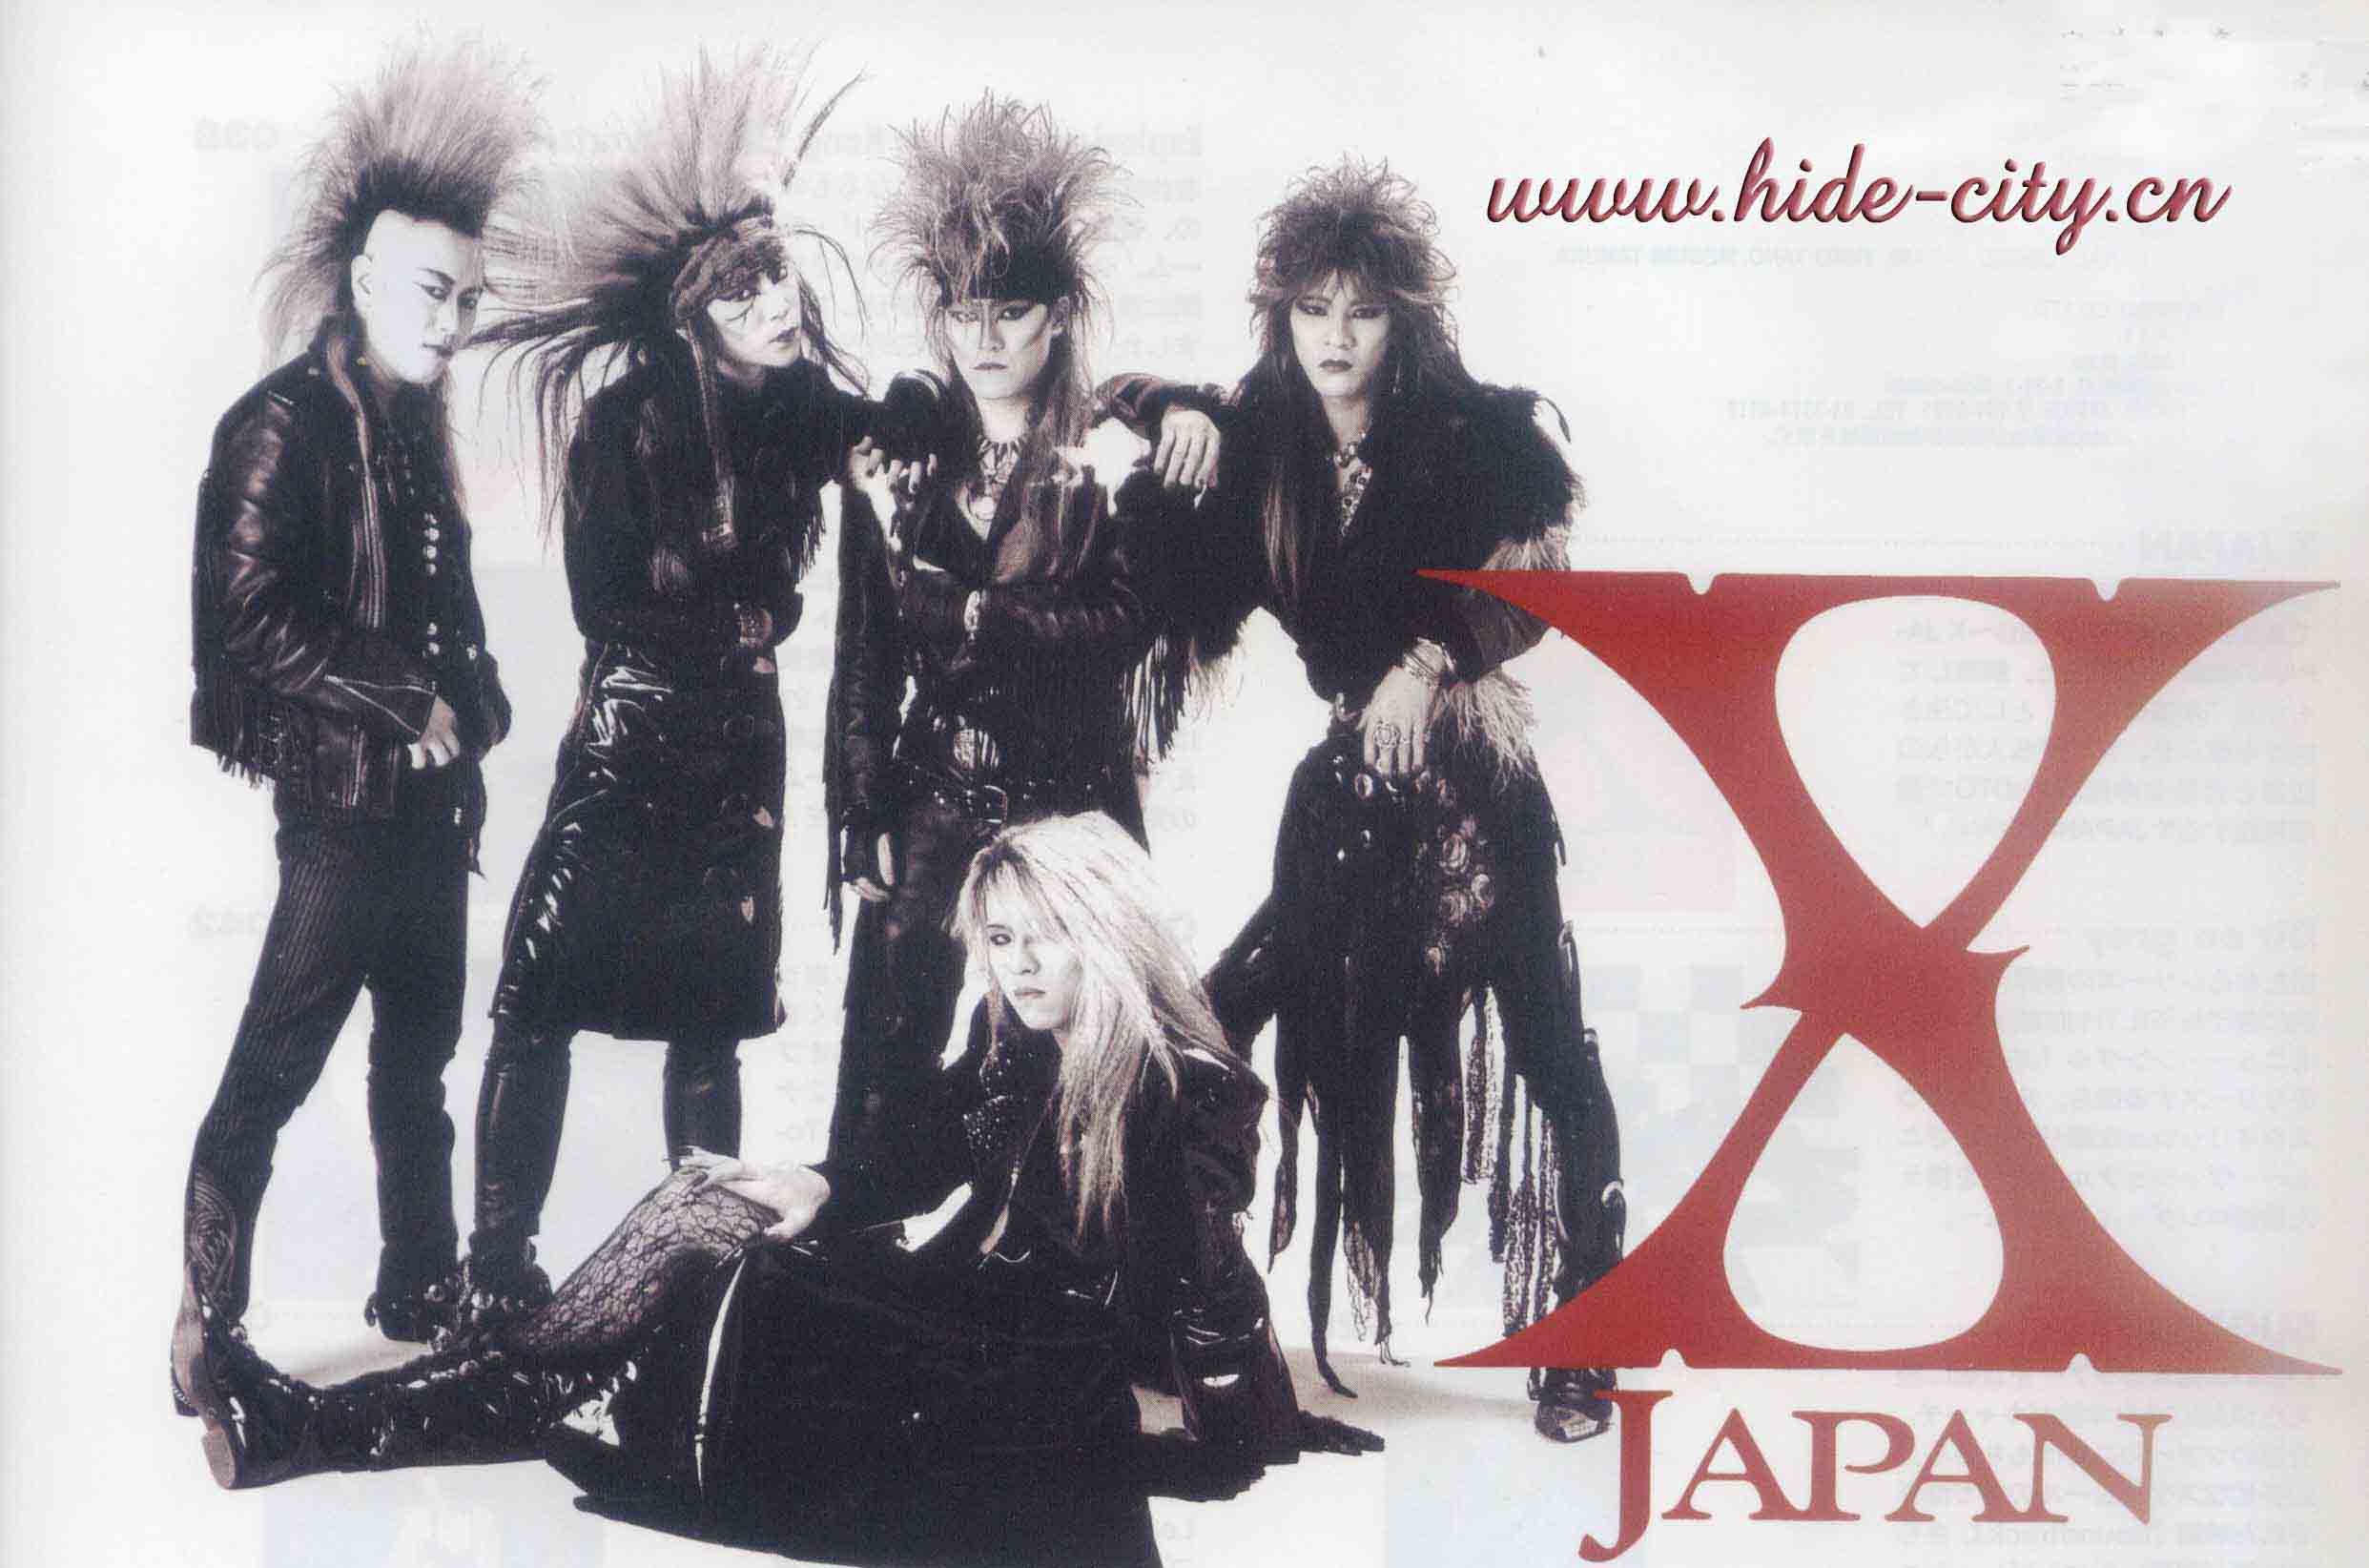 x japan, Jrock, Heavy, Metal, Symphonic, Japan Wallpaper